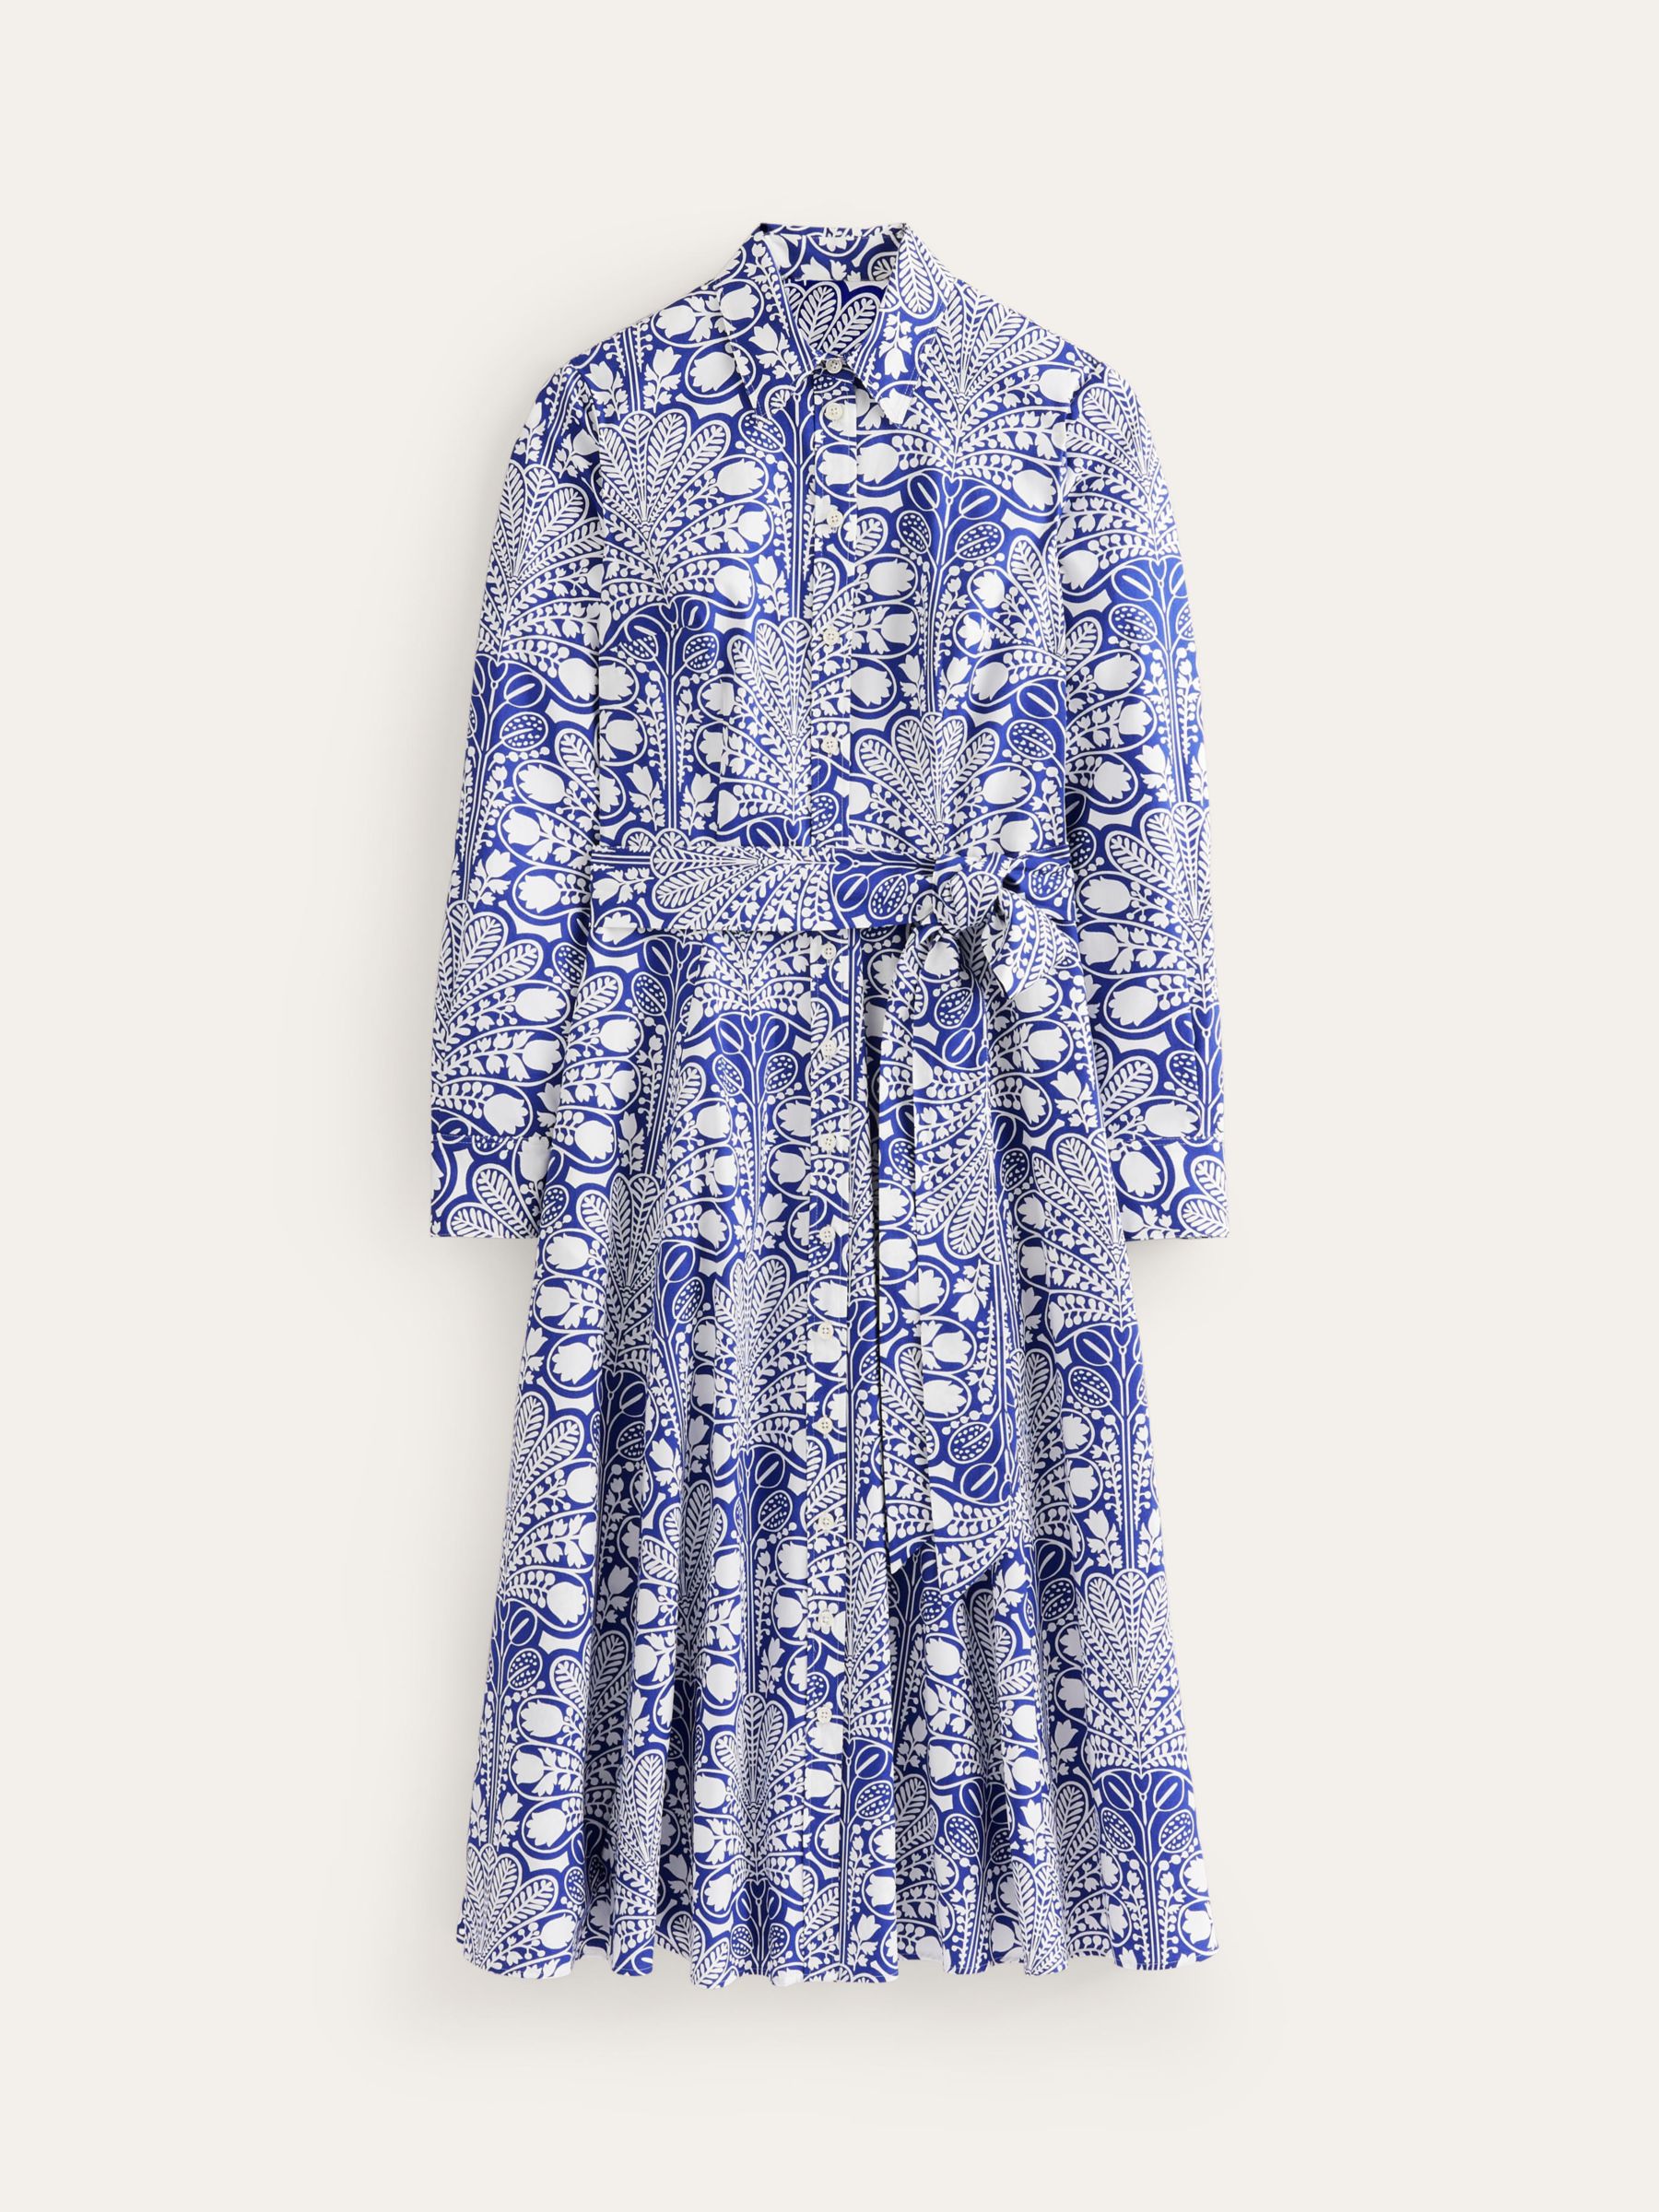 Boden Amy Floral Midi Cotton Shirt Dress, Blue/White, 8